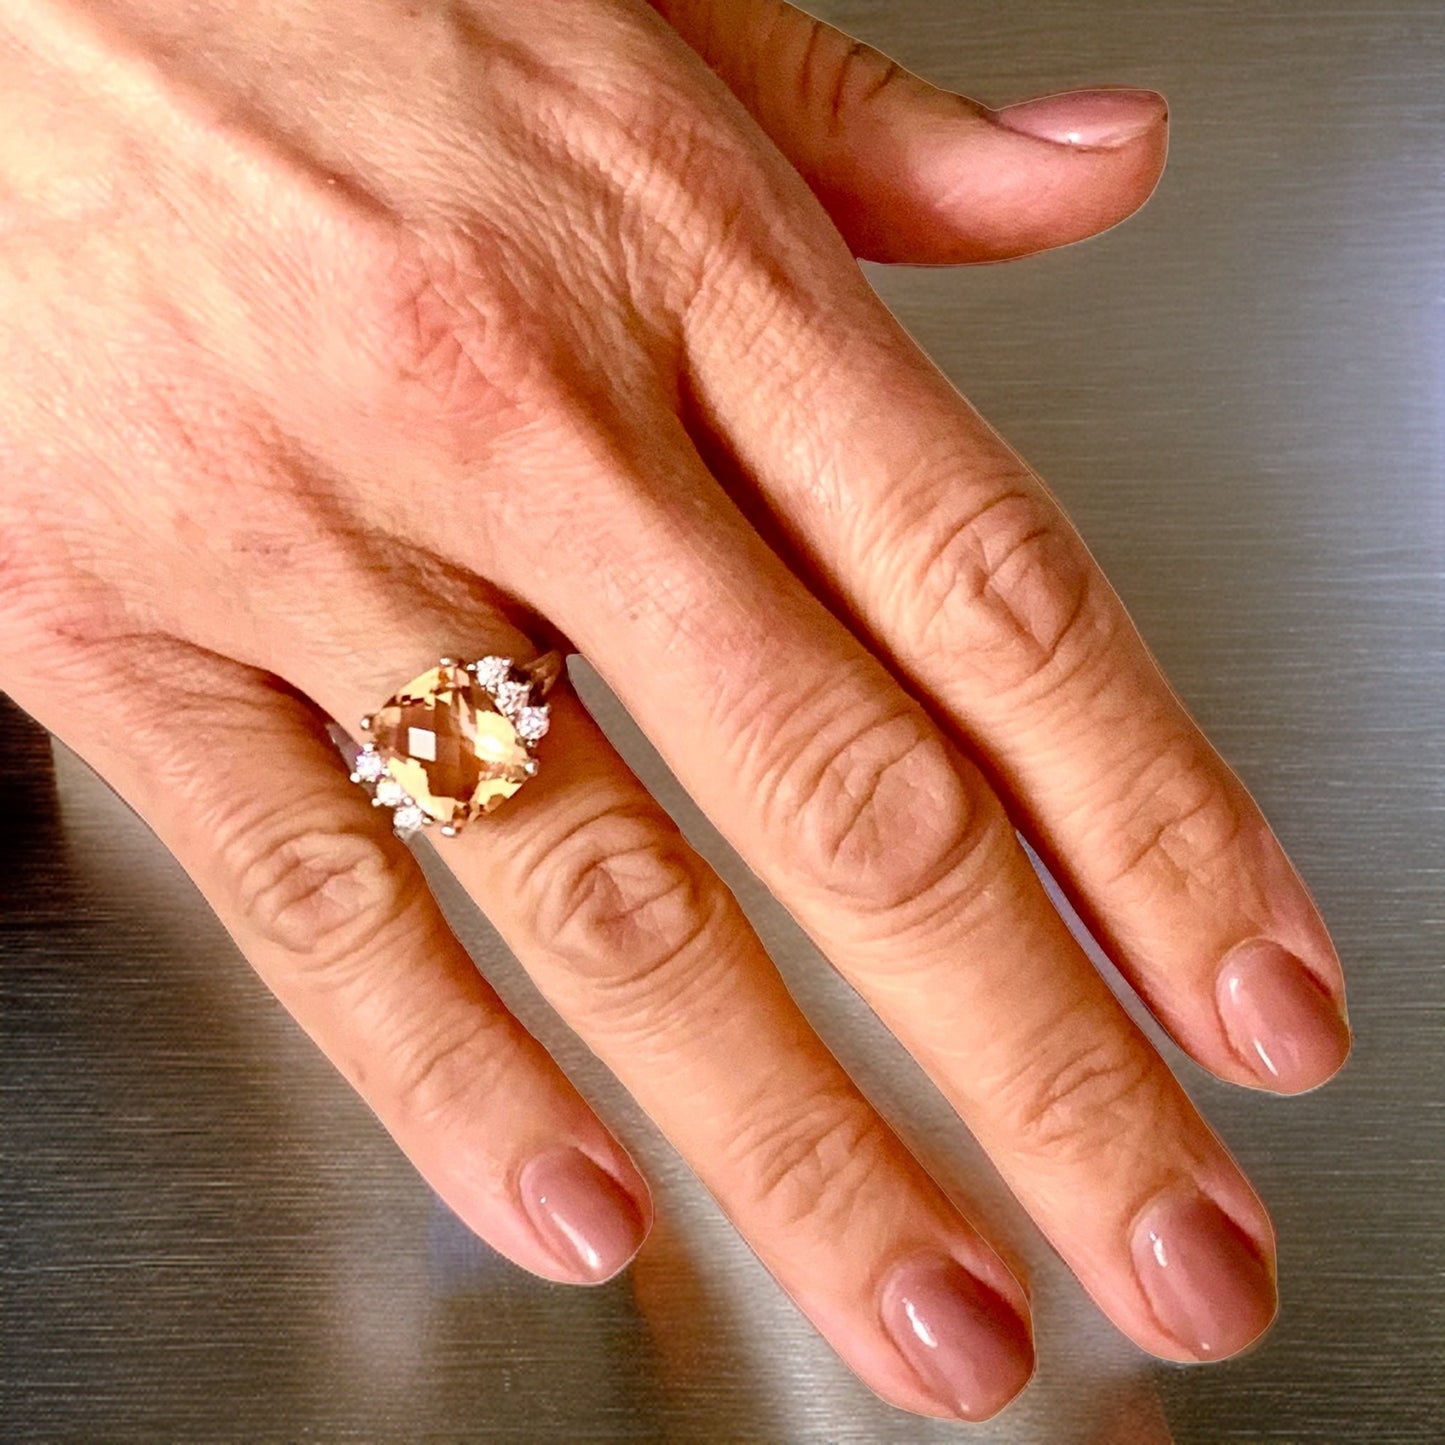 Diamond Morganite Ring Size 7.25 14k Gold 5.60 TCW Certified $5,950 120600